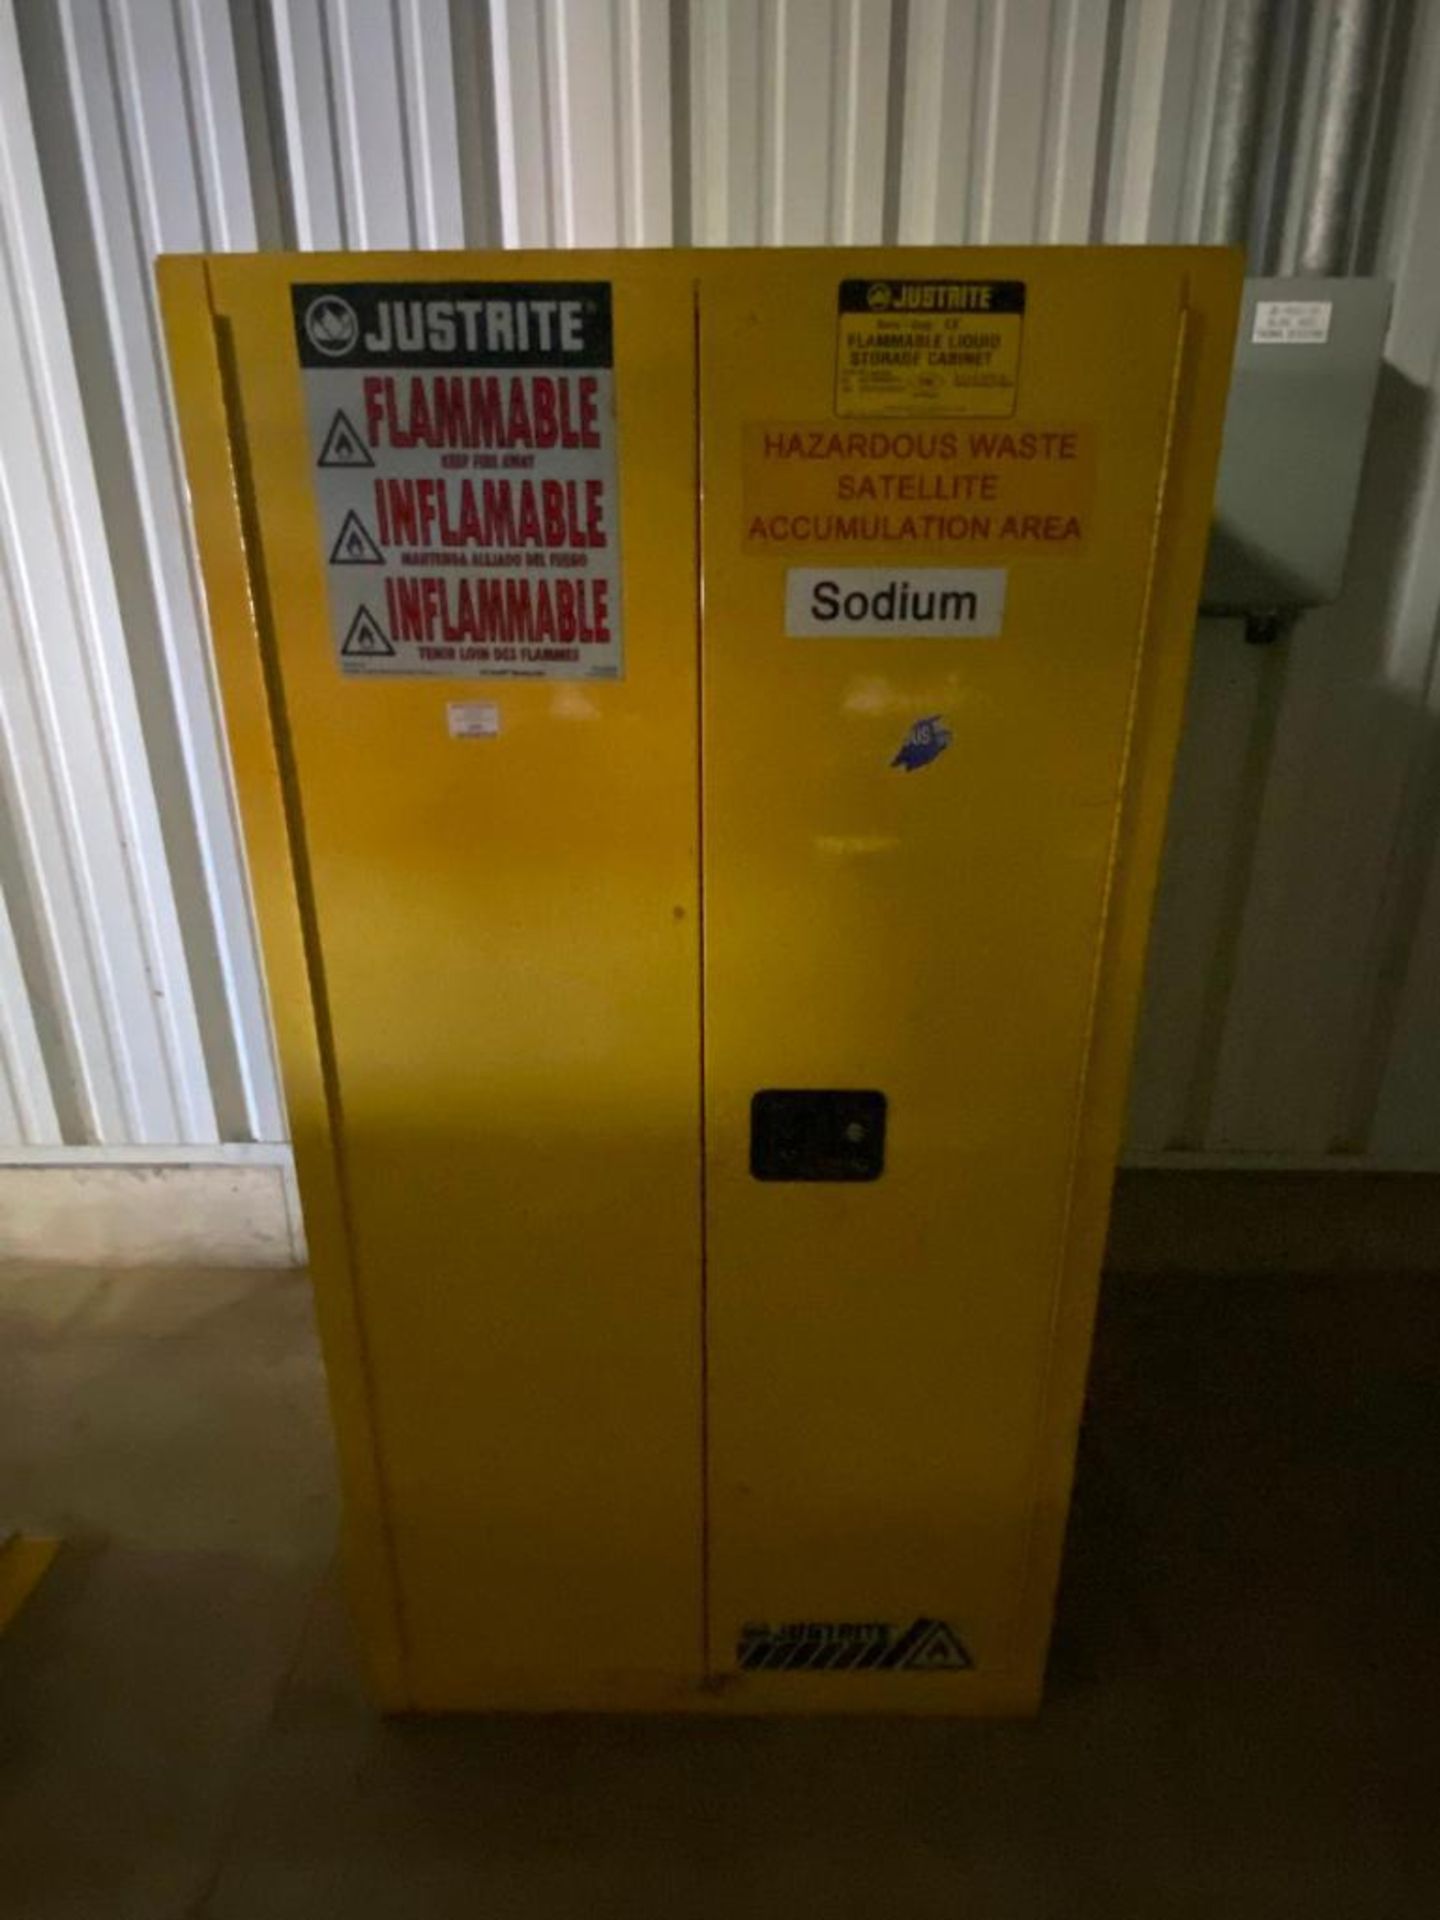 Justrite Model 896260 Flammable Liquid Storage Cabinet